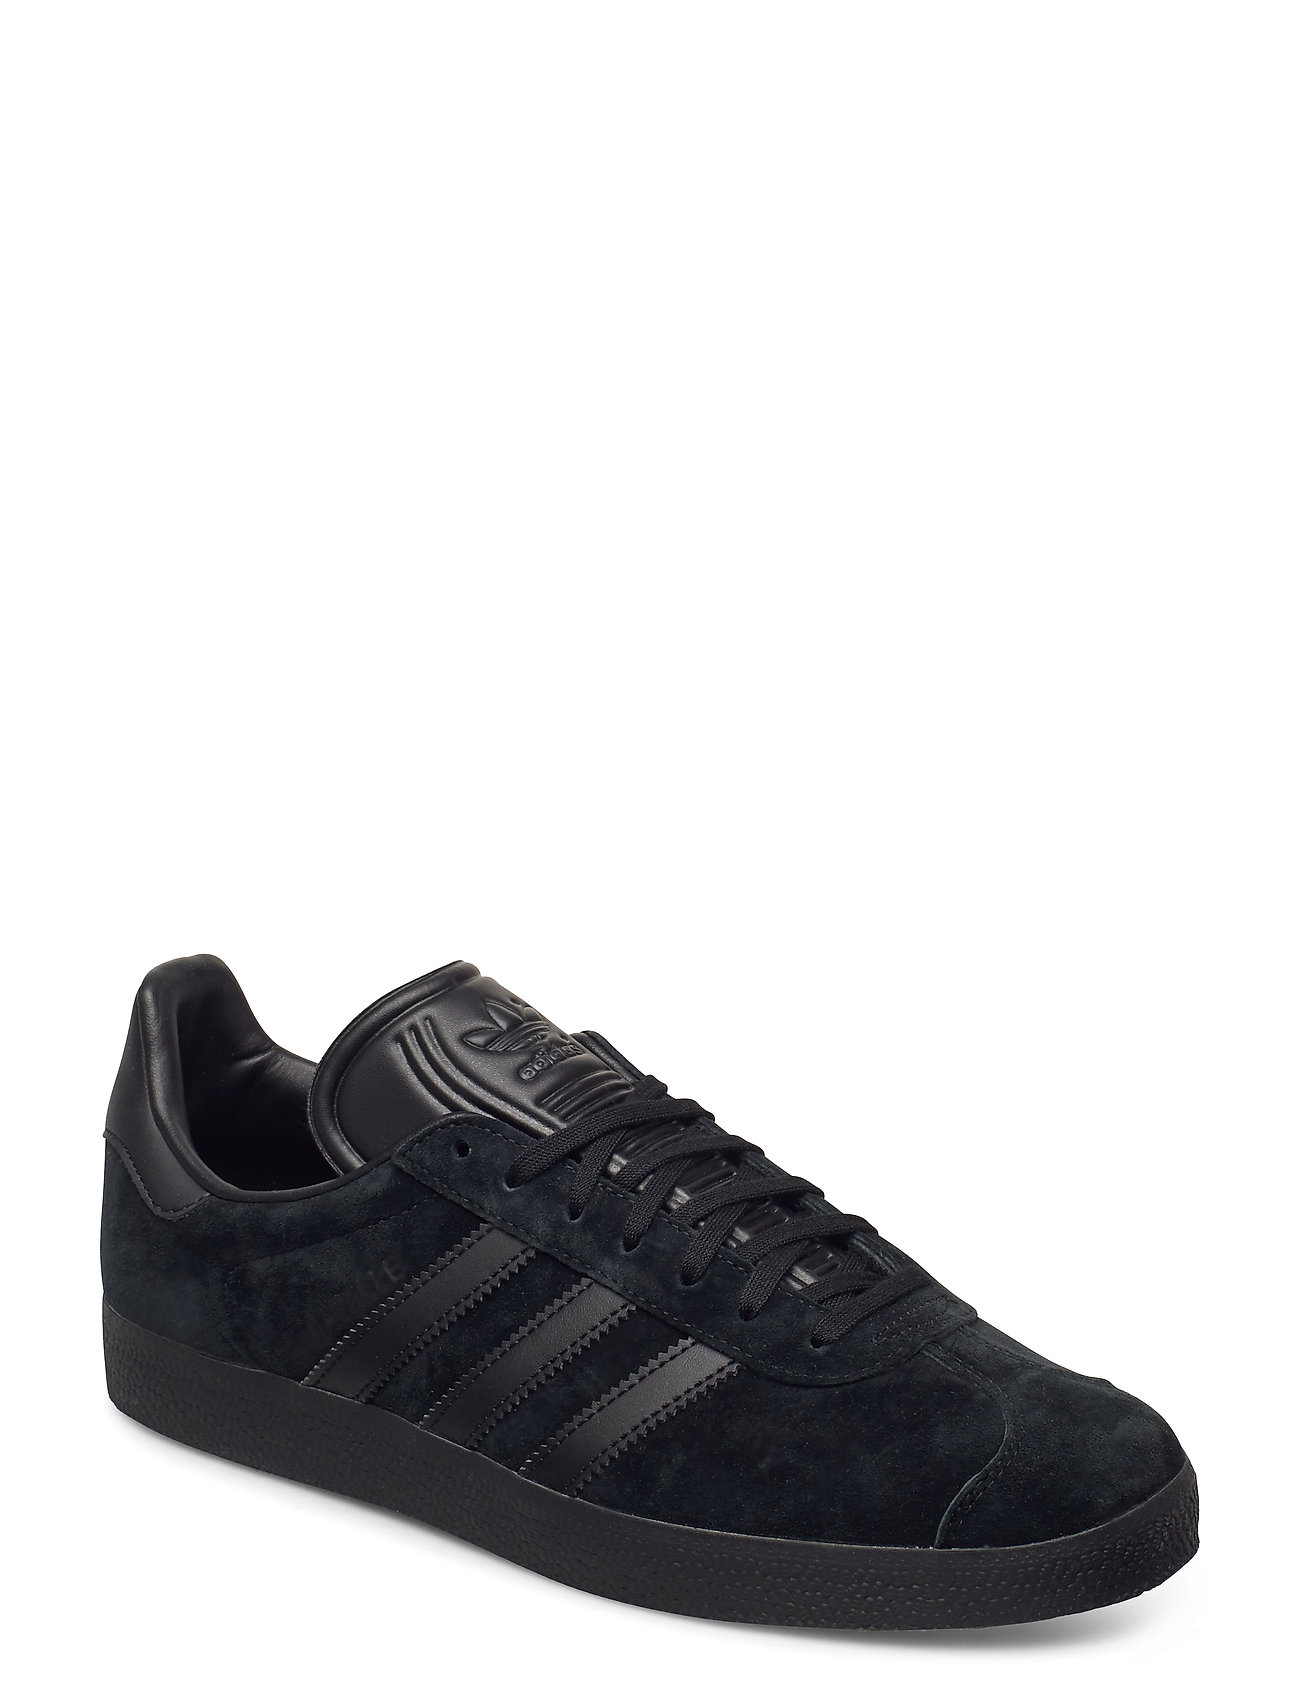 Gazelle Sport Sneakers Low-top Sneakers Black Adidas Originals